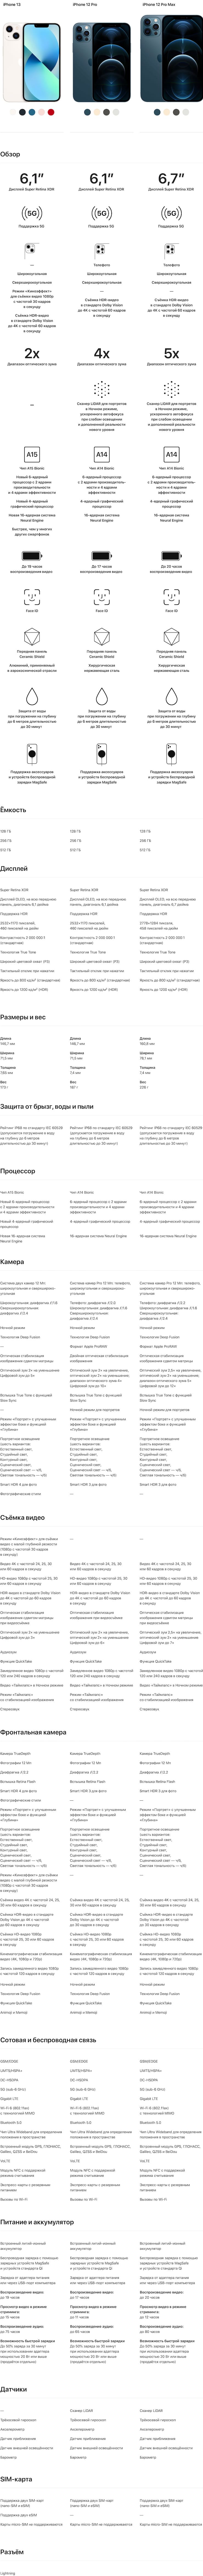 Подробное сравнение технических характеристик (спецификаций) iPhone 13, iPhone 12 Pro и iPhone 12 Pro Max